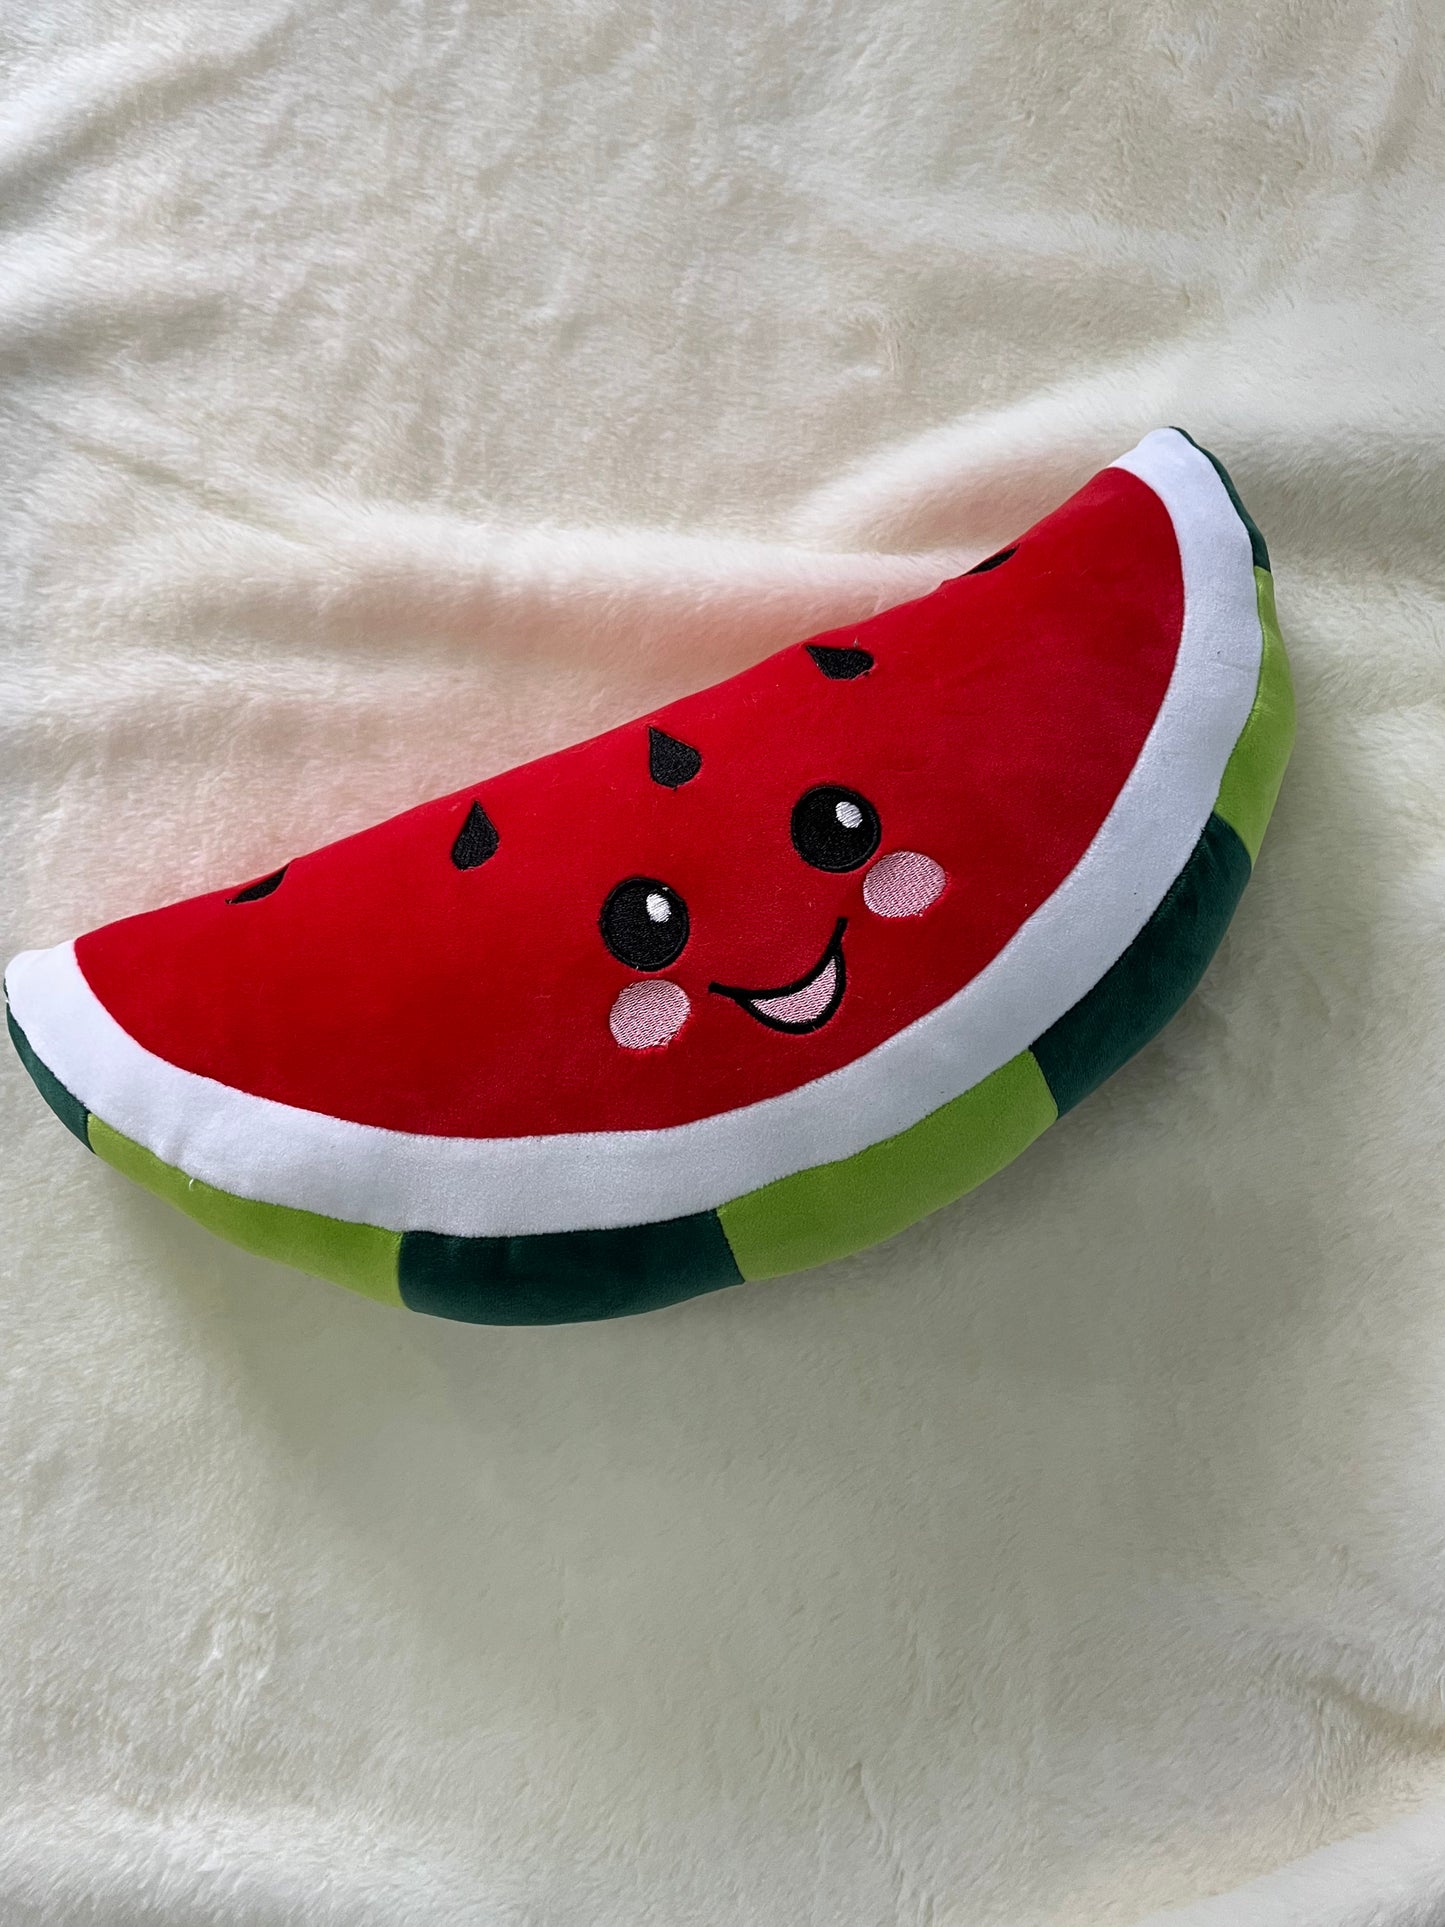 Tropicana: The watermelon soft toy